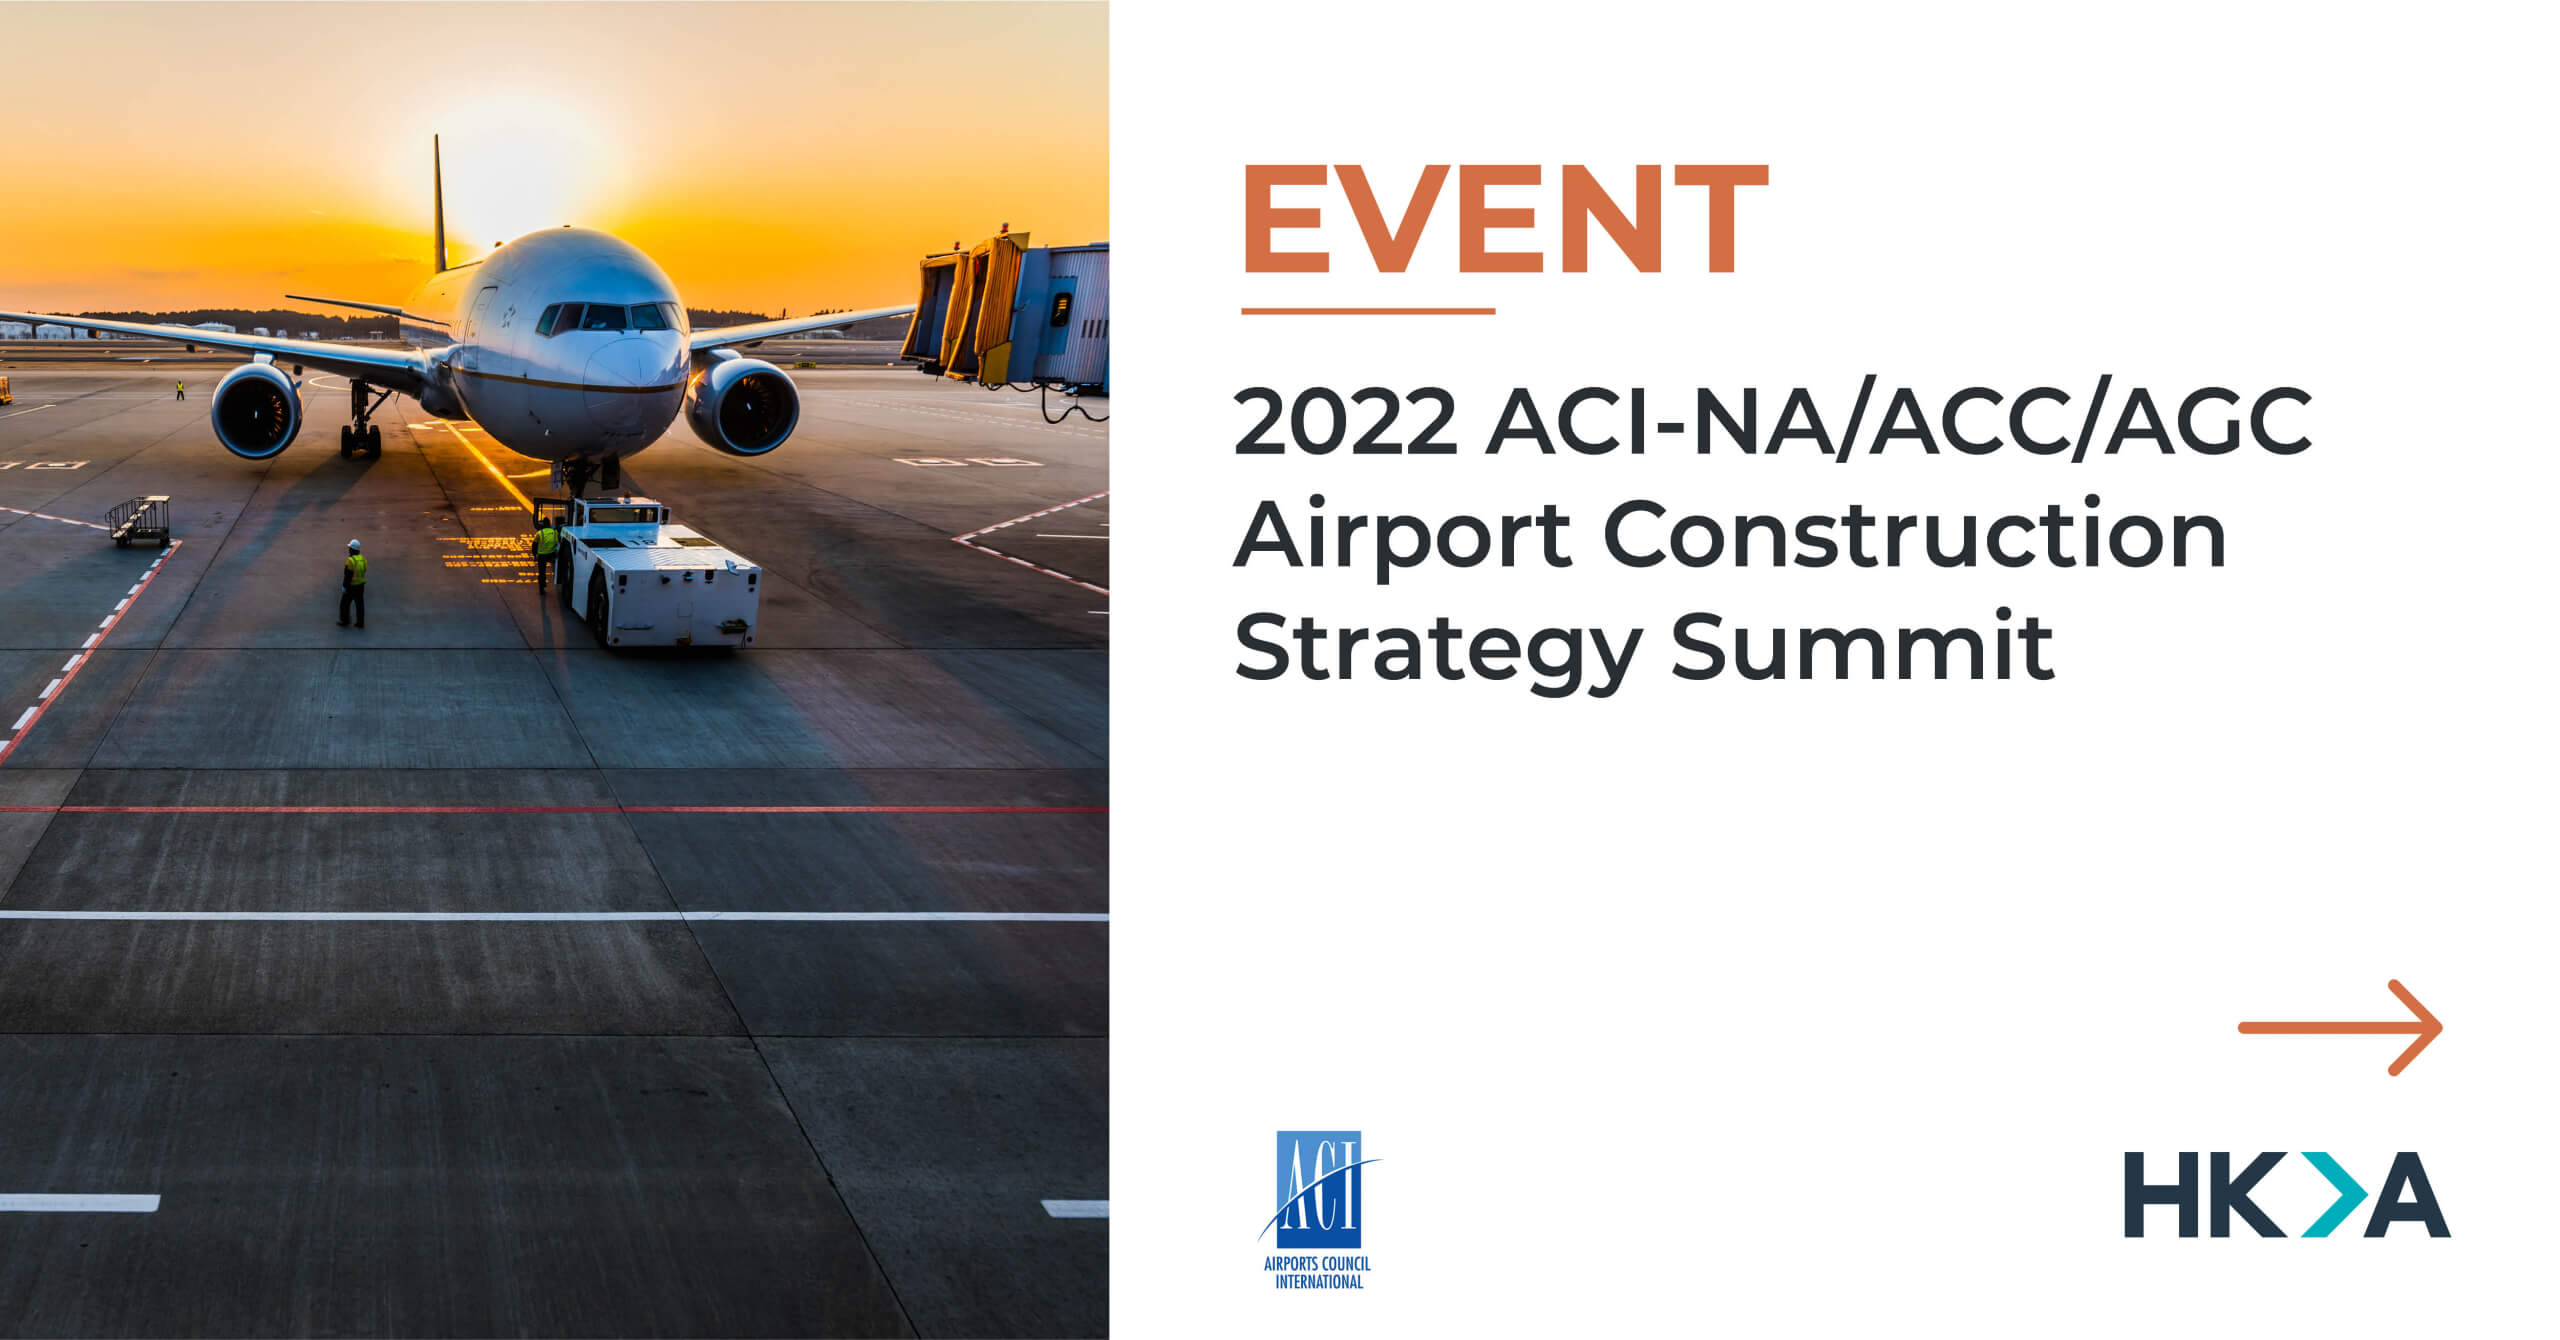 2022 ACINA/ACC/AGC Airport Construction Strategy Summit HKA